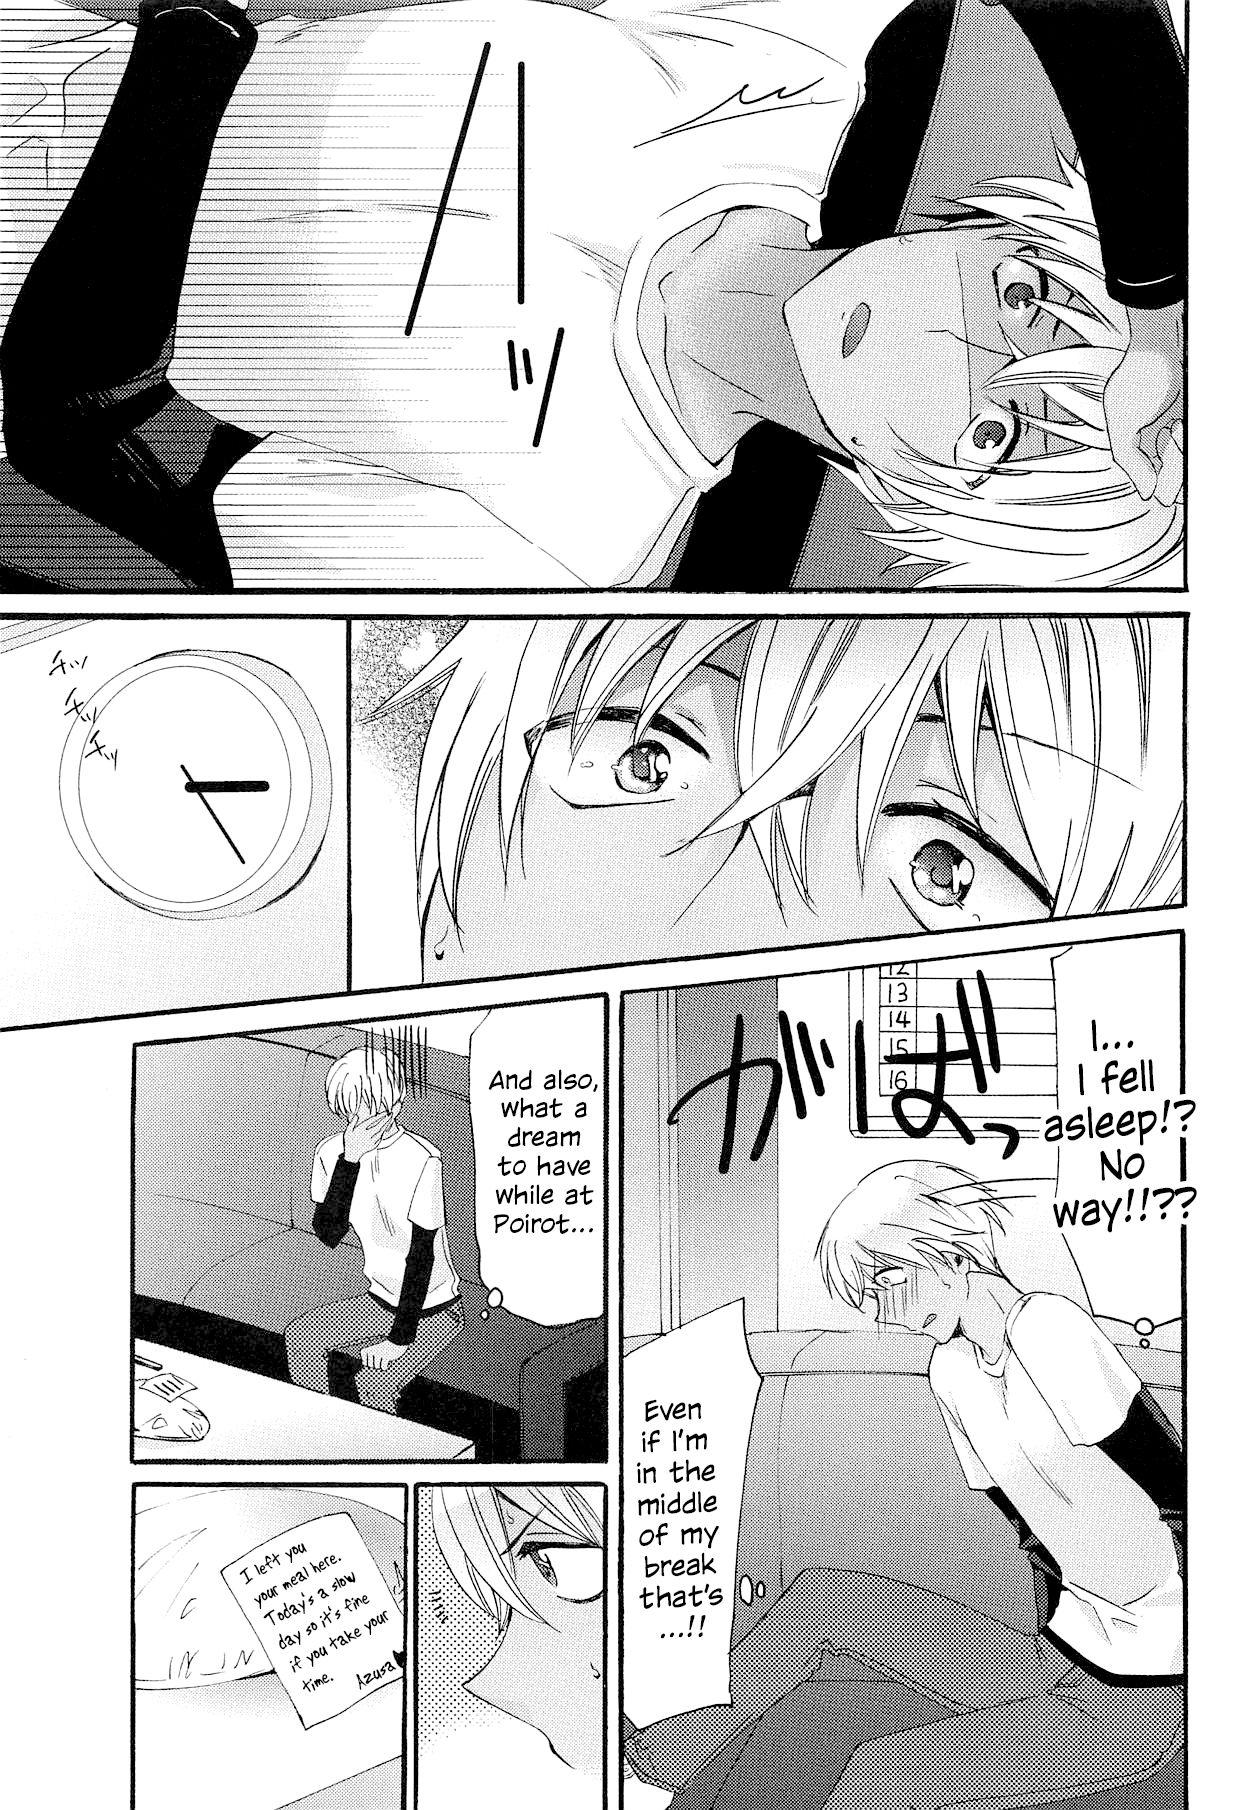 Peeing Defiling you within the dream - Yume no Naka de Kimi o Kegasu - Detective conan 4some - Page 8